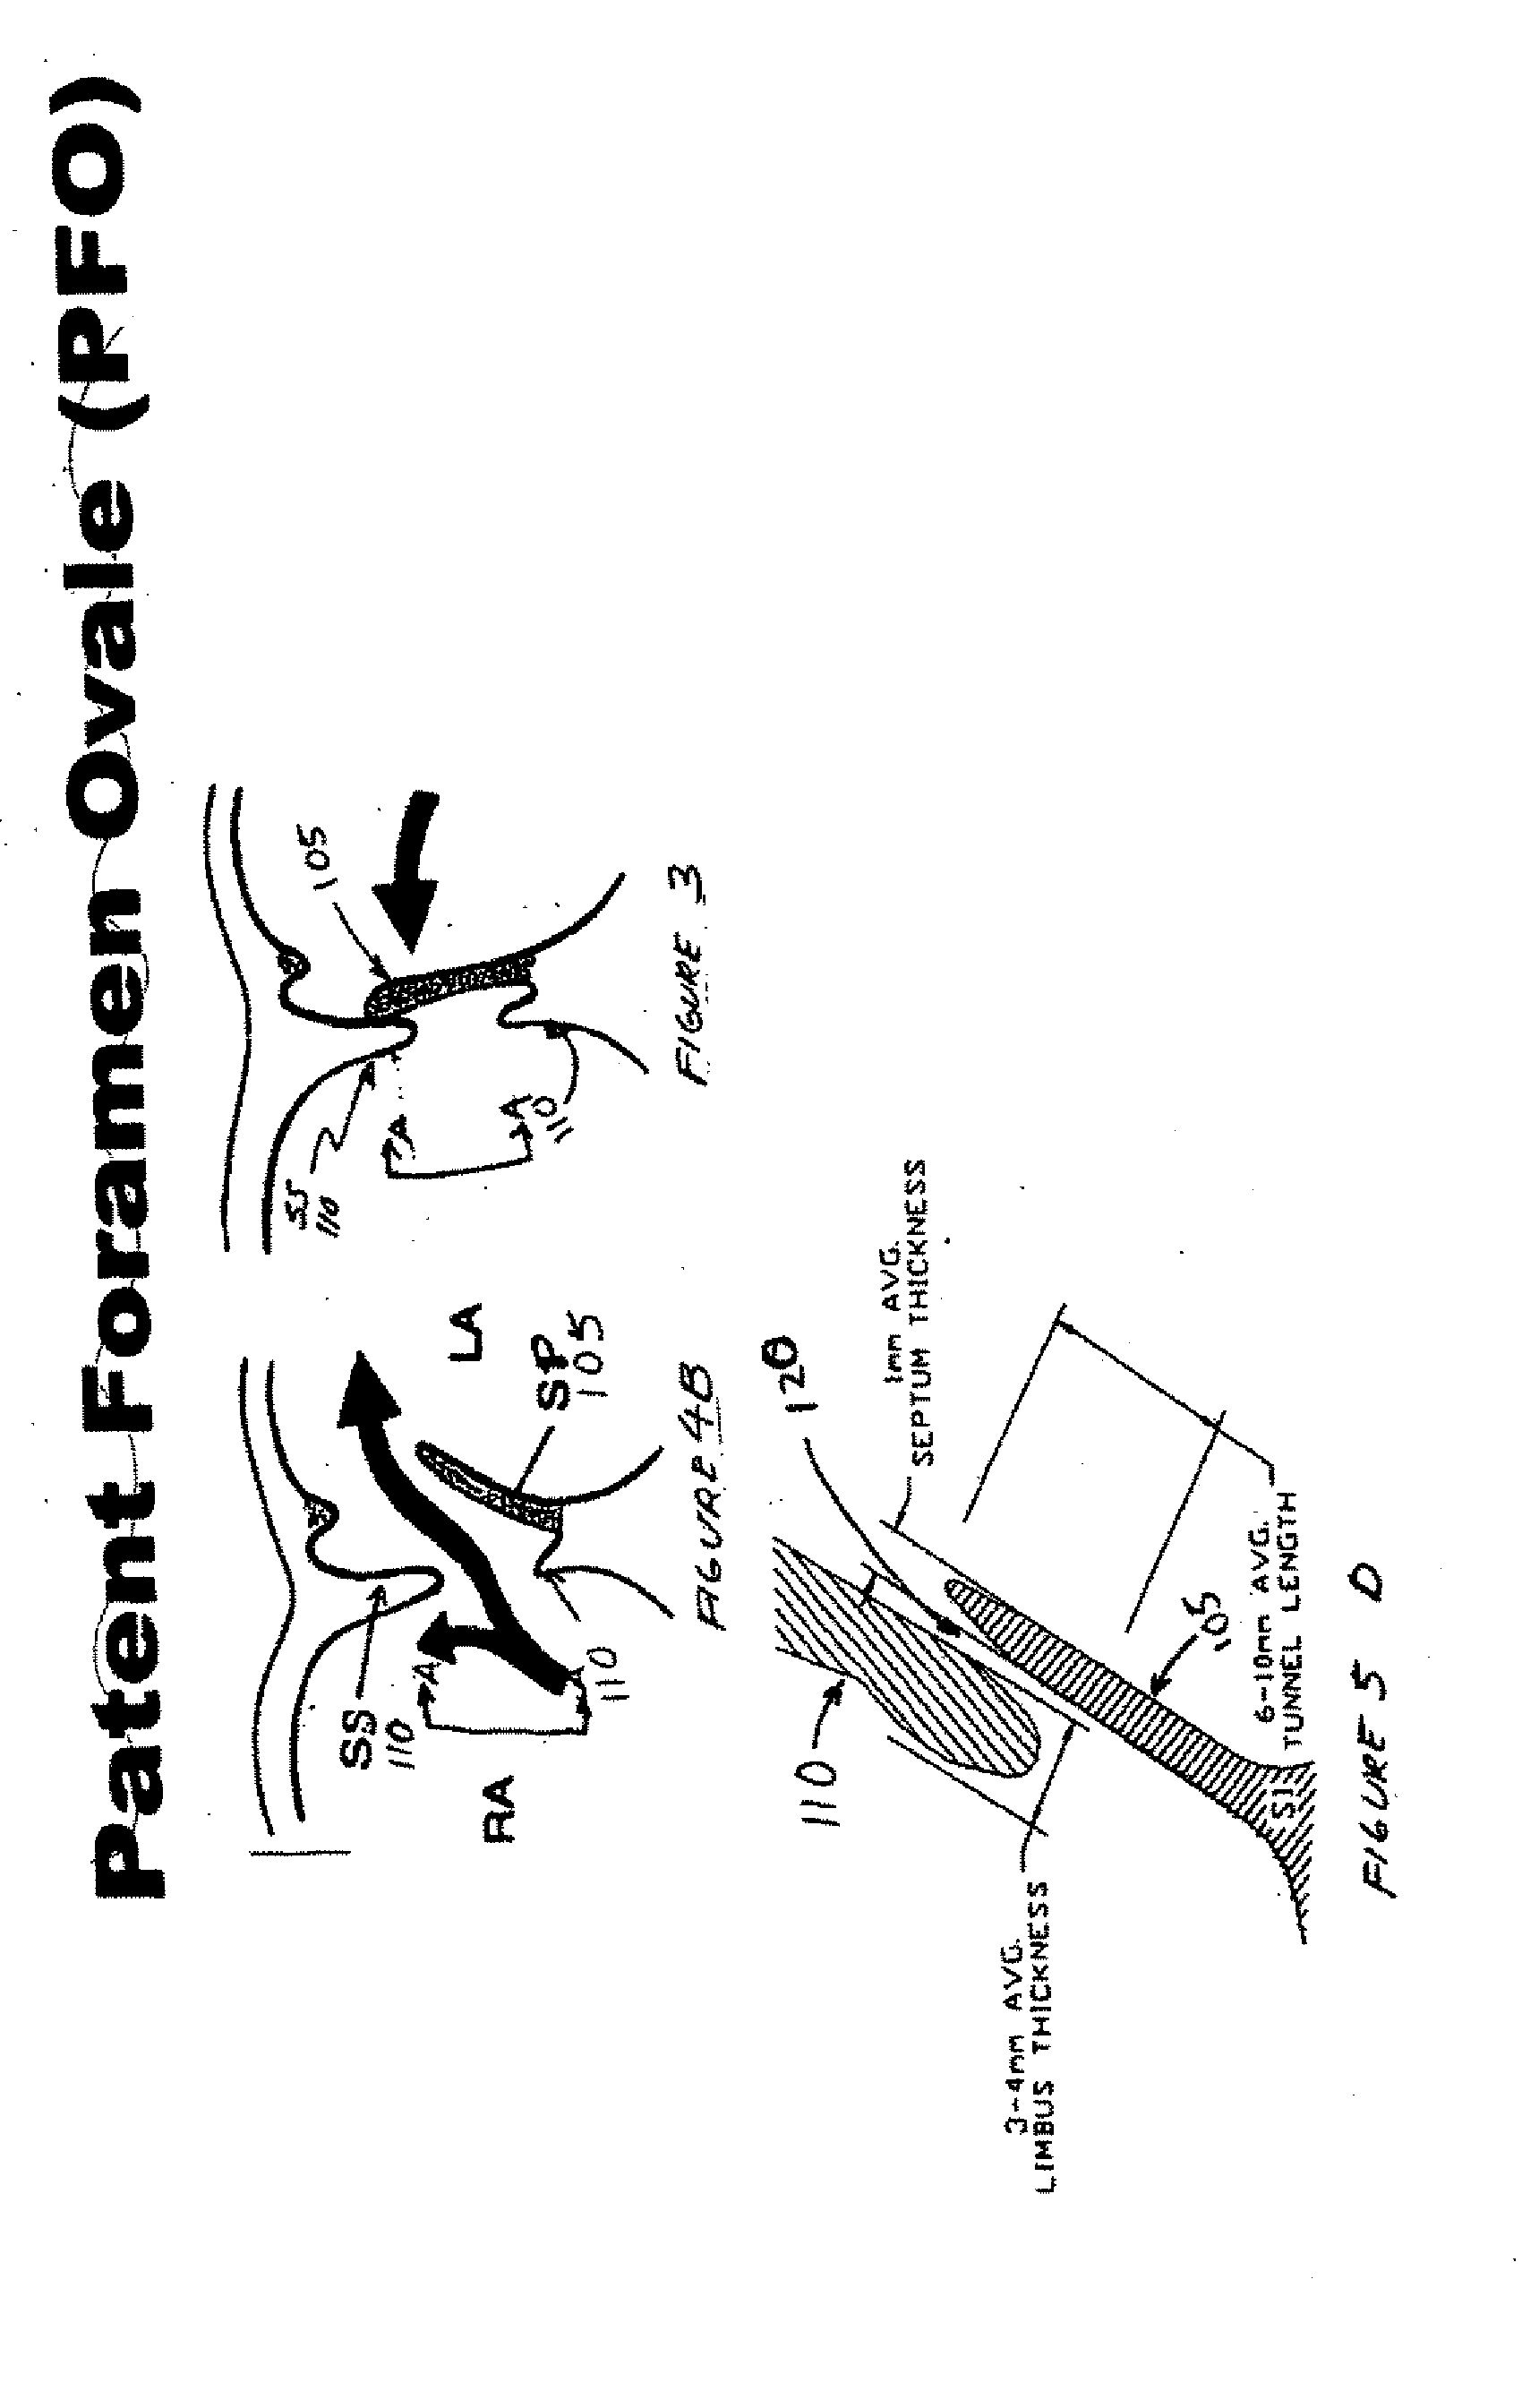 Patent foramen ovale closure method